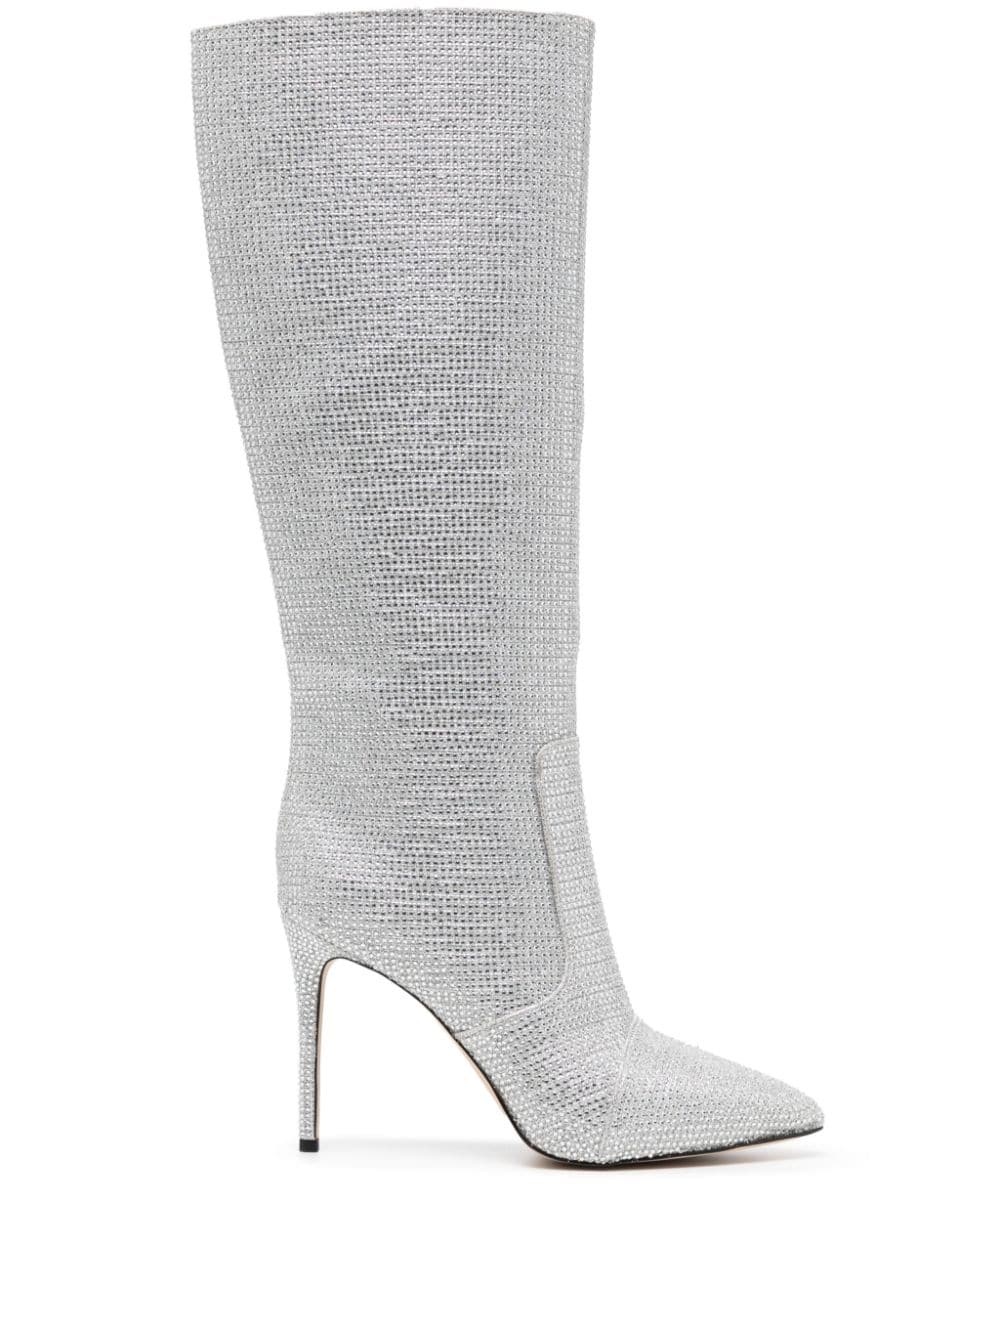 Michael Kors Rue 100mm crystal-embellished boots - Silver von Michael Kors